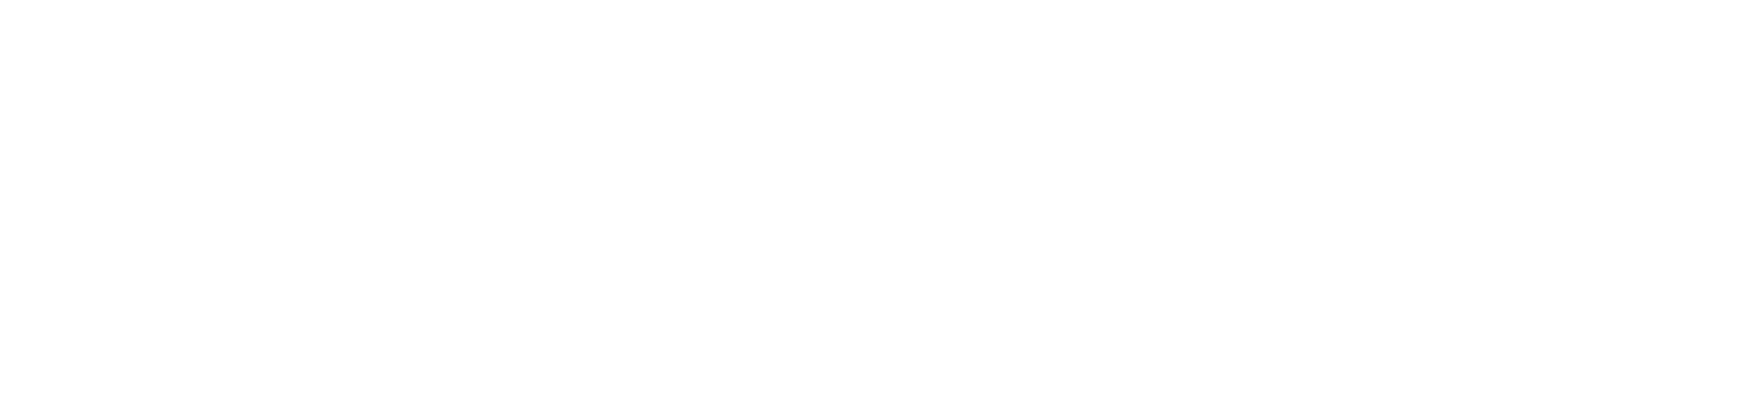 Ocean Energy Safety Institute